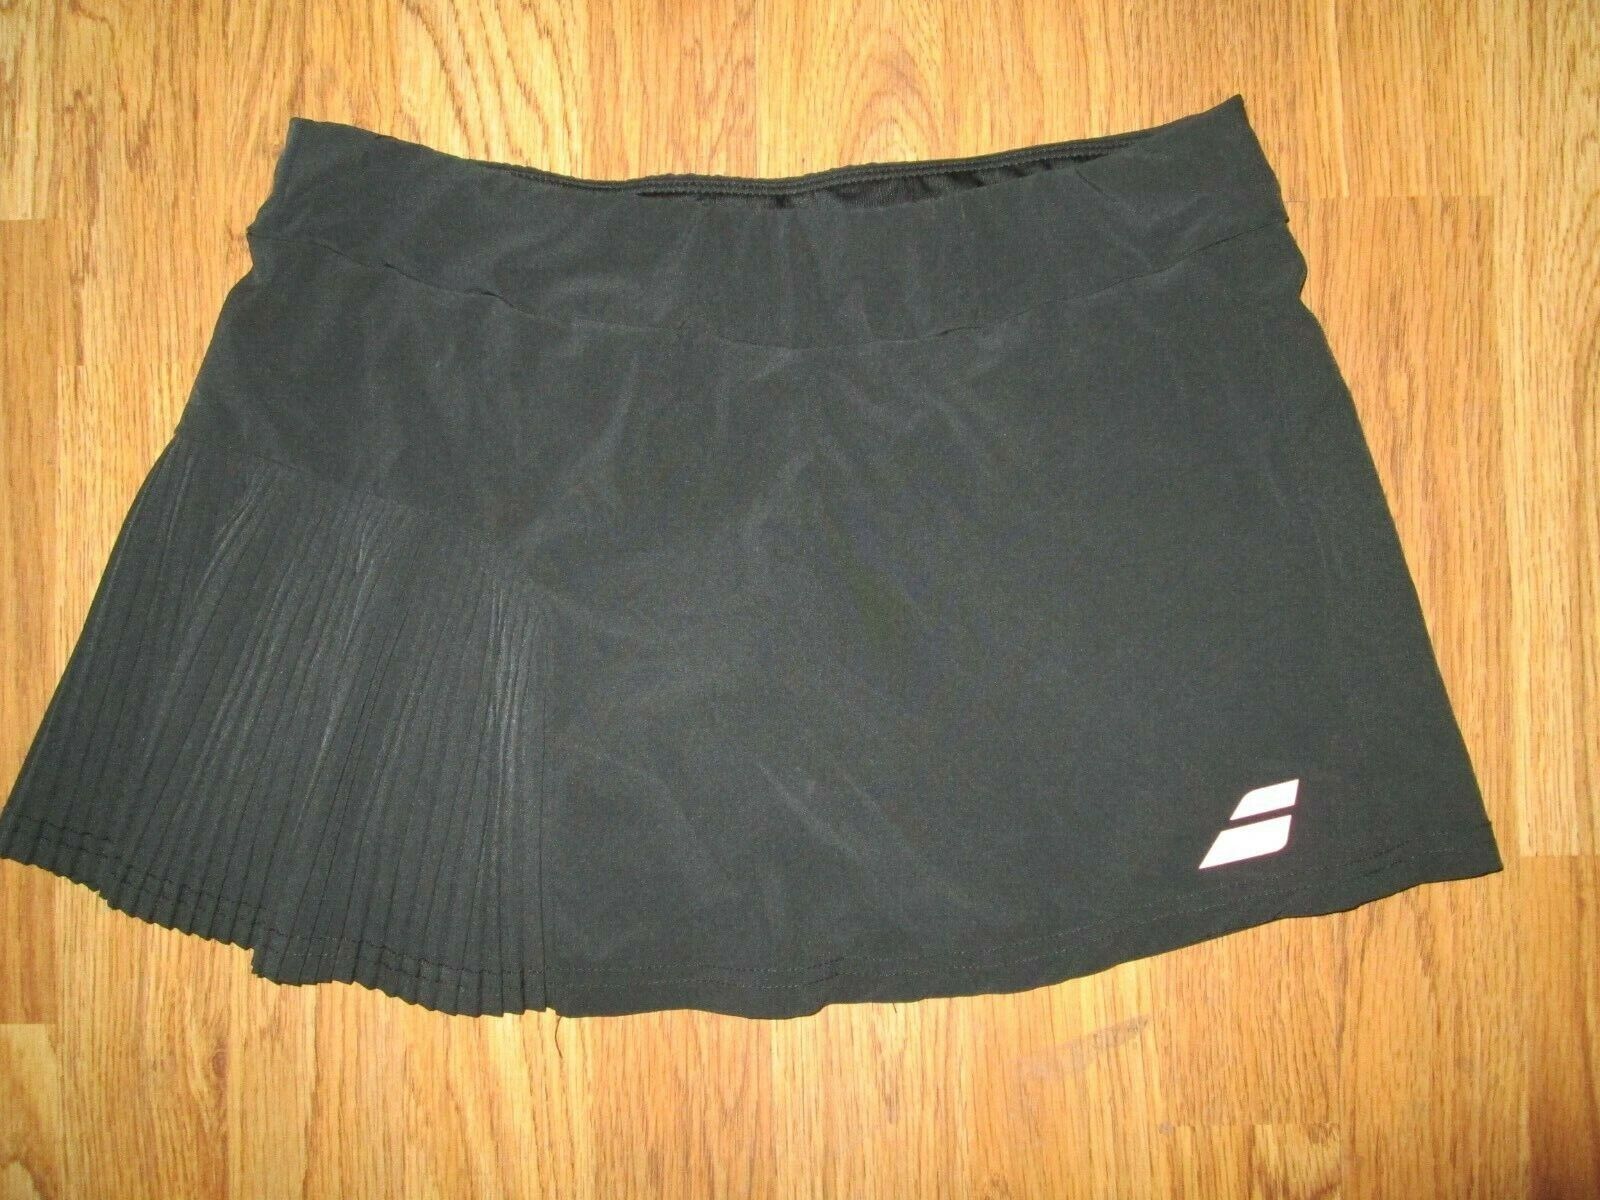 Womens BABOLAR tennis skort skirt w/ built n spandex shorts sz X